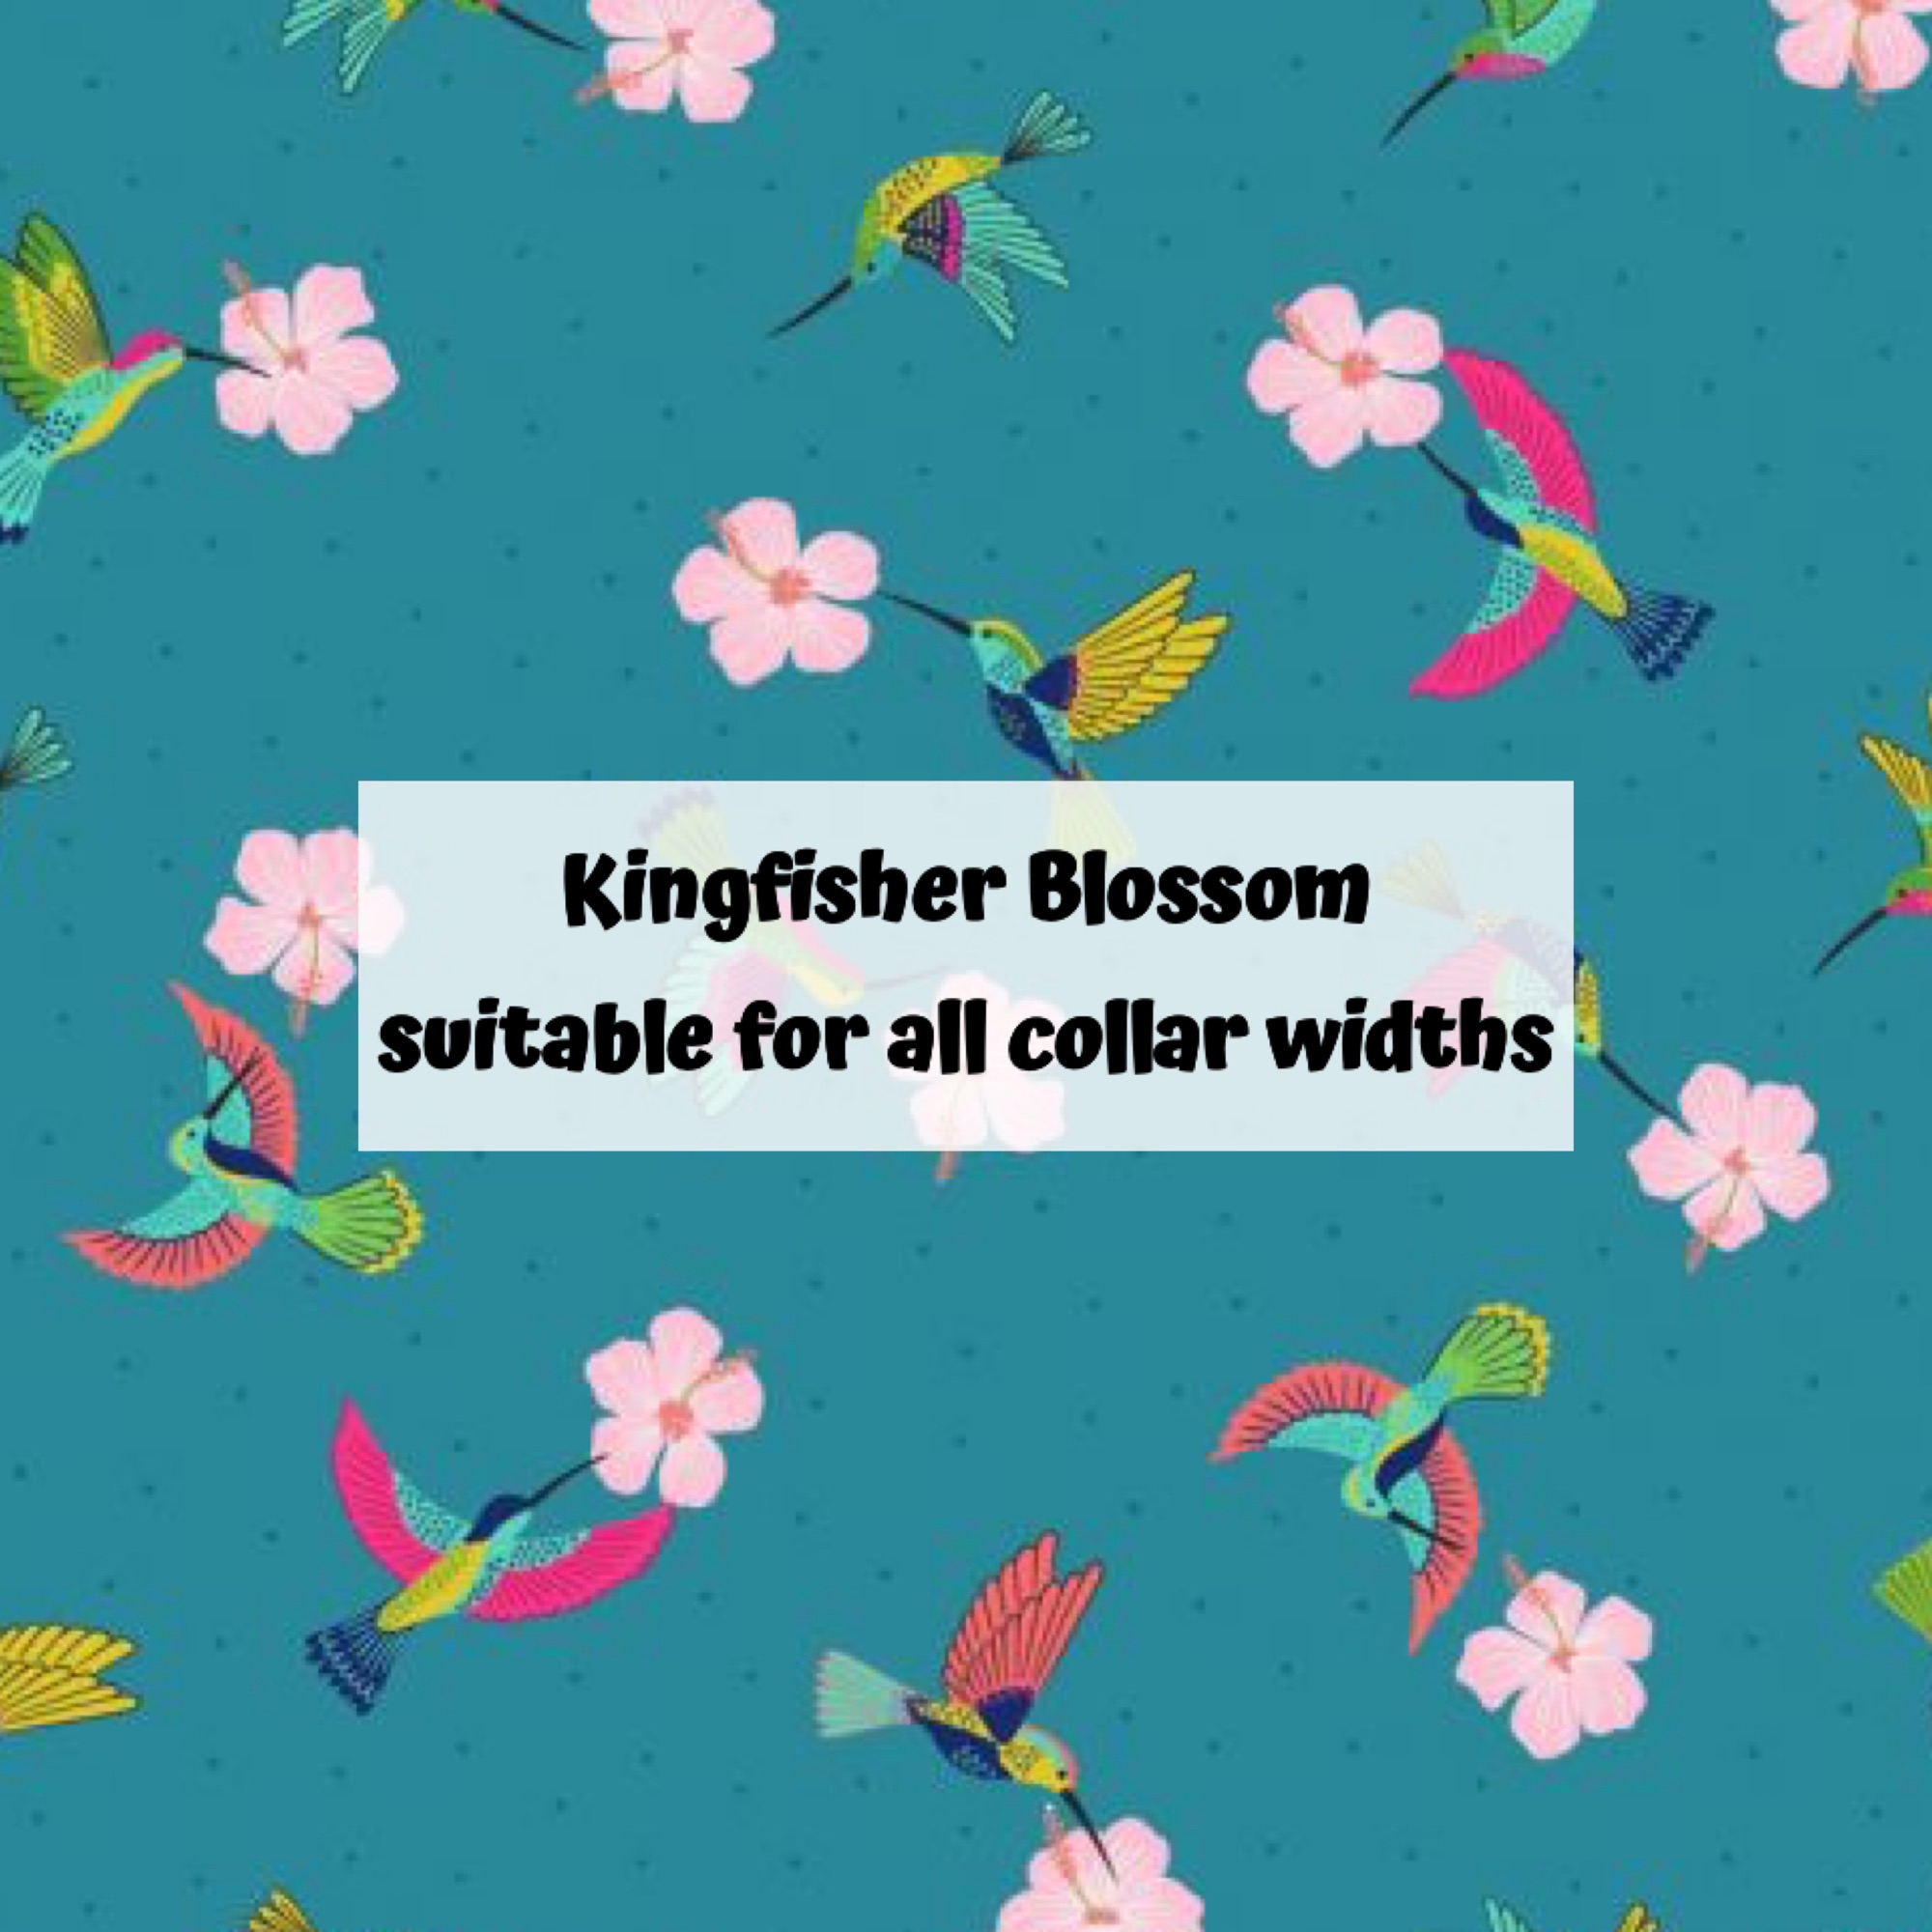 Kingfisher Blossom